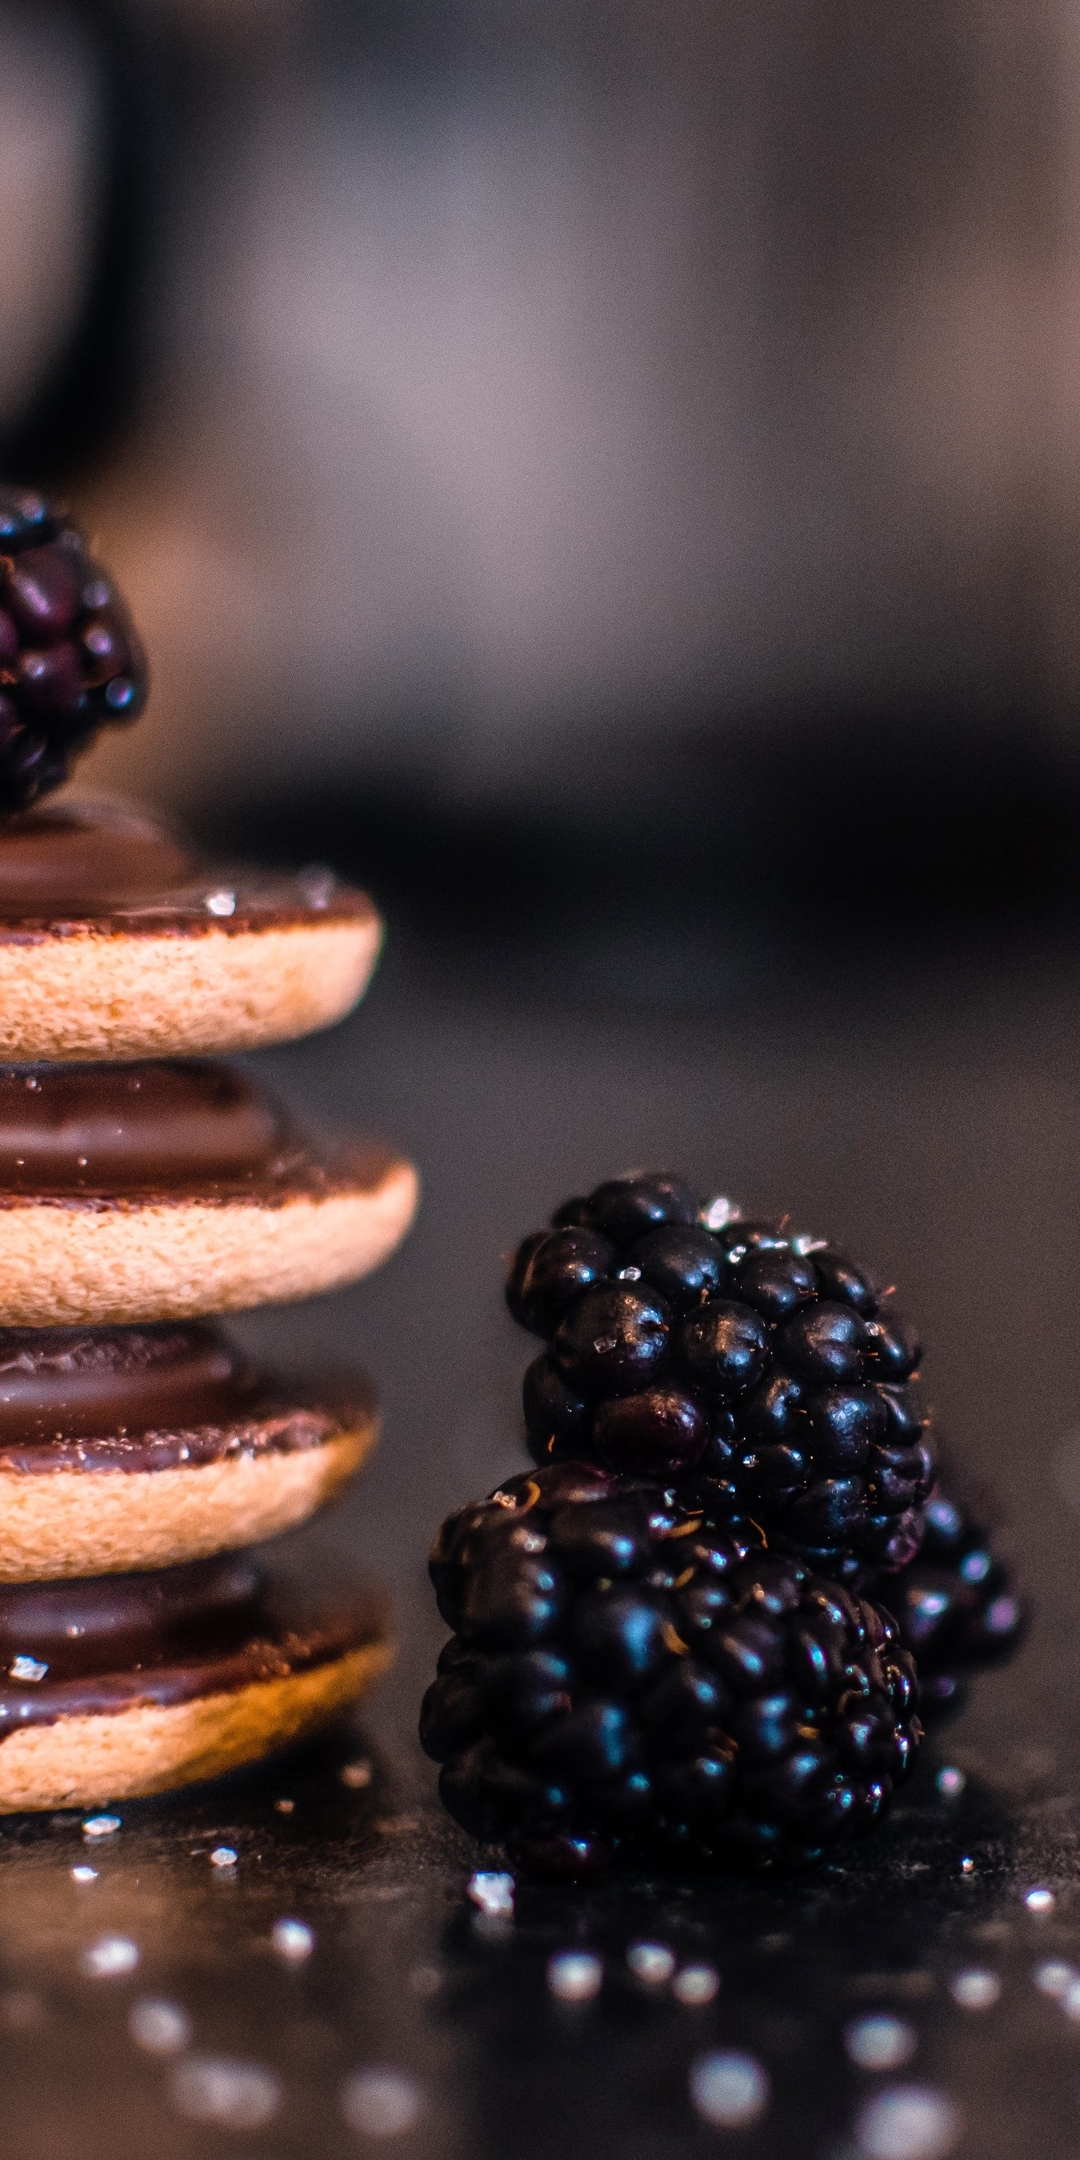 Image: Cookies, chocolate, blackberry, berry